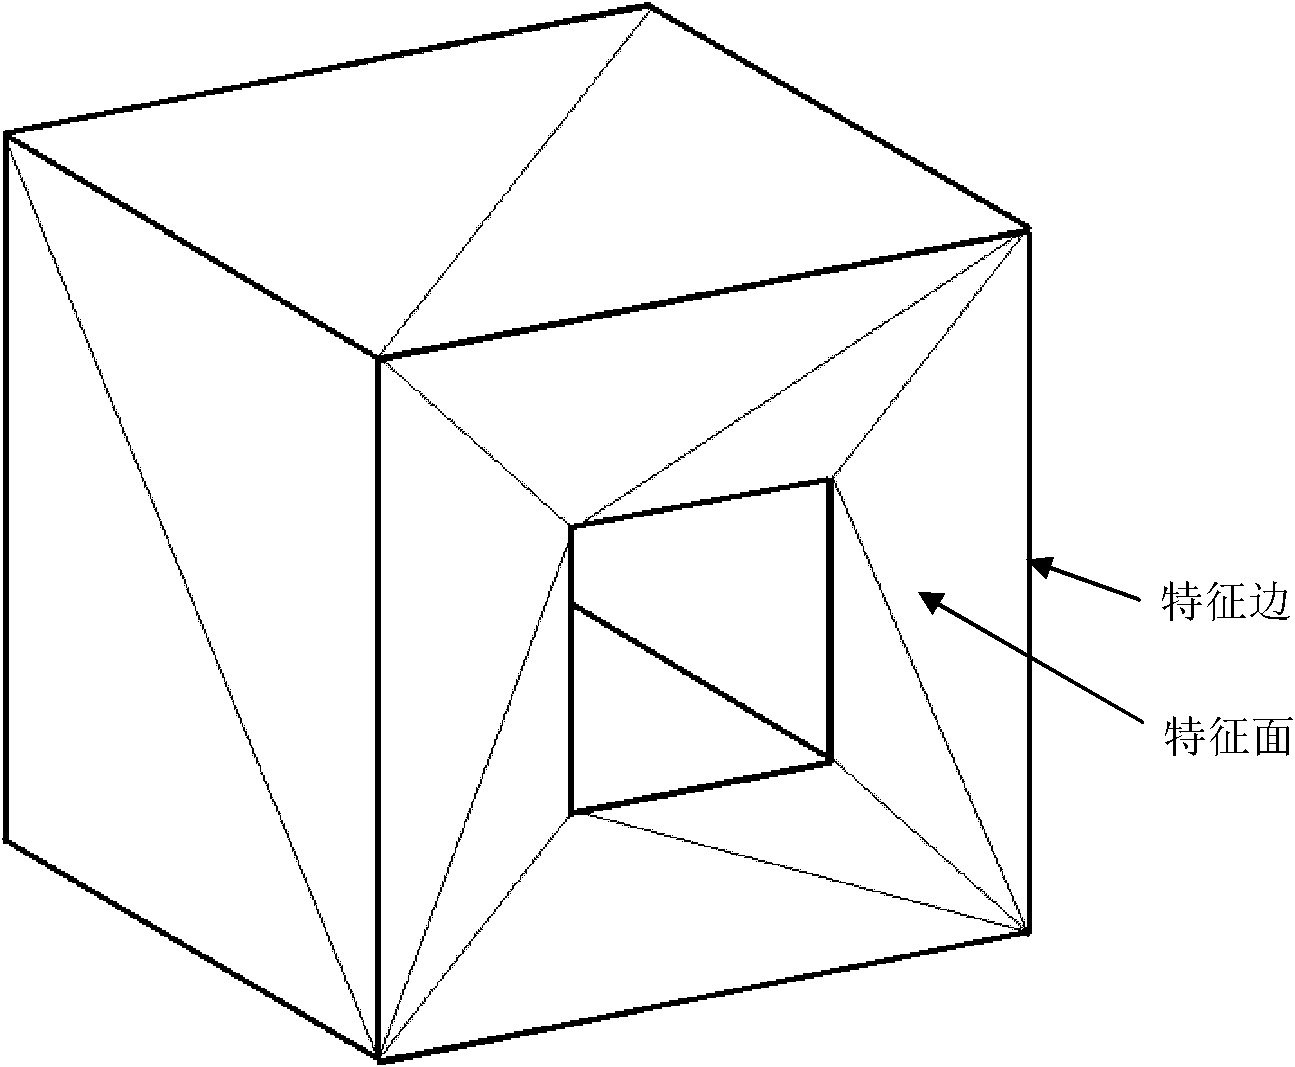 Three-dimensional entity model surface finite element mesh automatic generation method